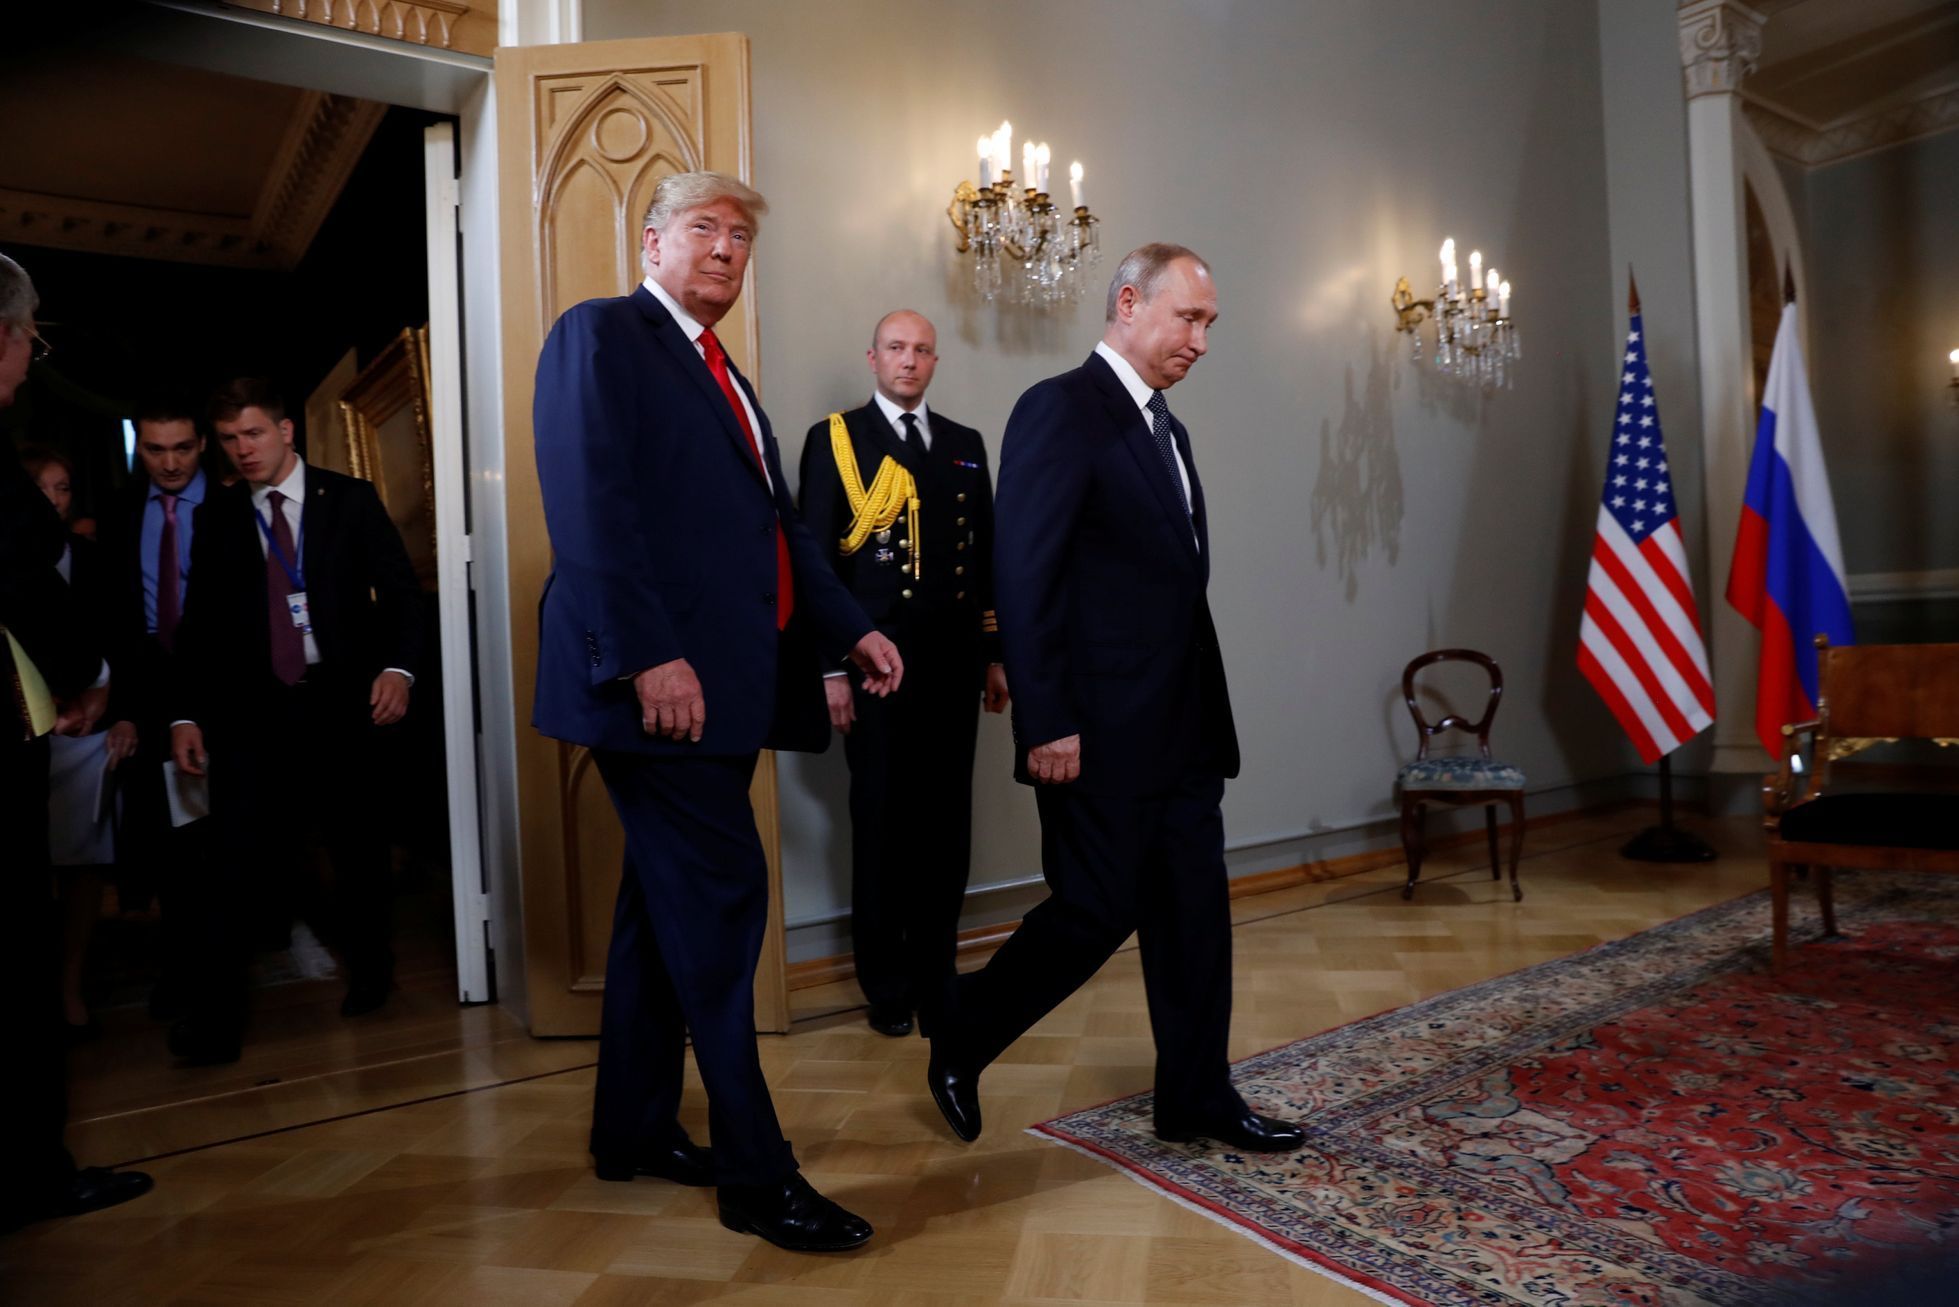 Summit amerického a ruského prezidenta Donalda Trumpa a Vladimira Putina